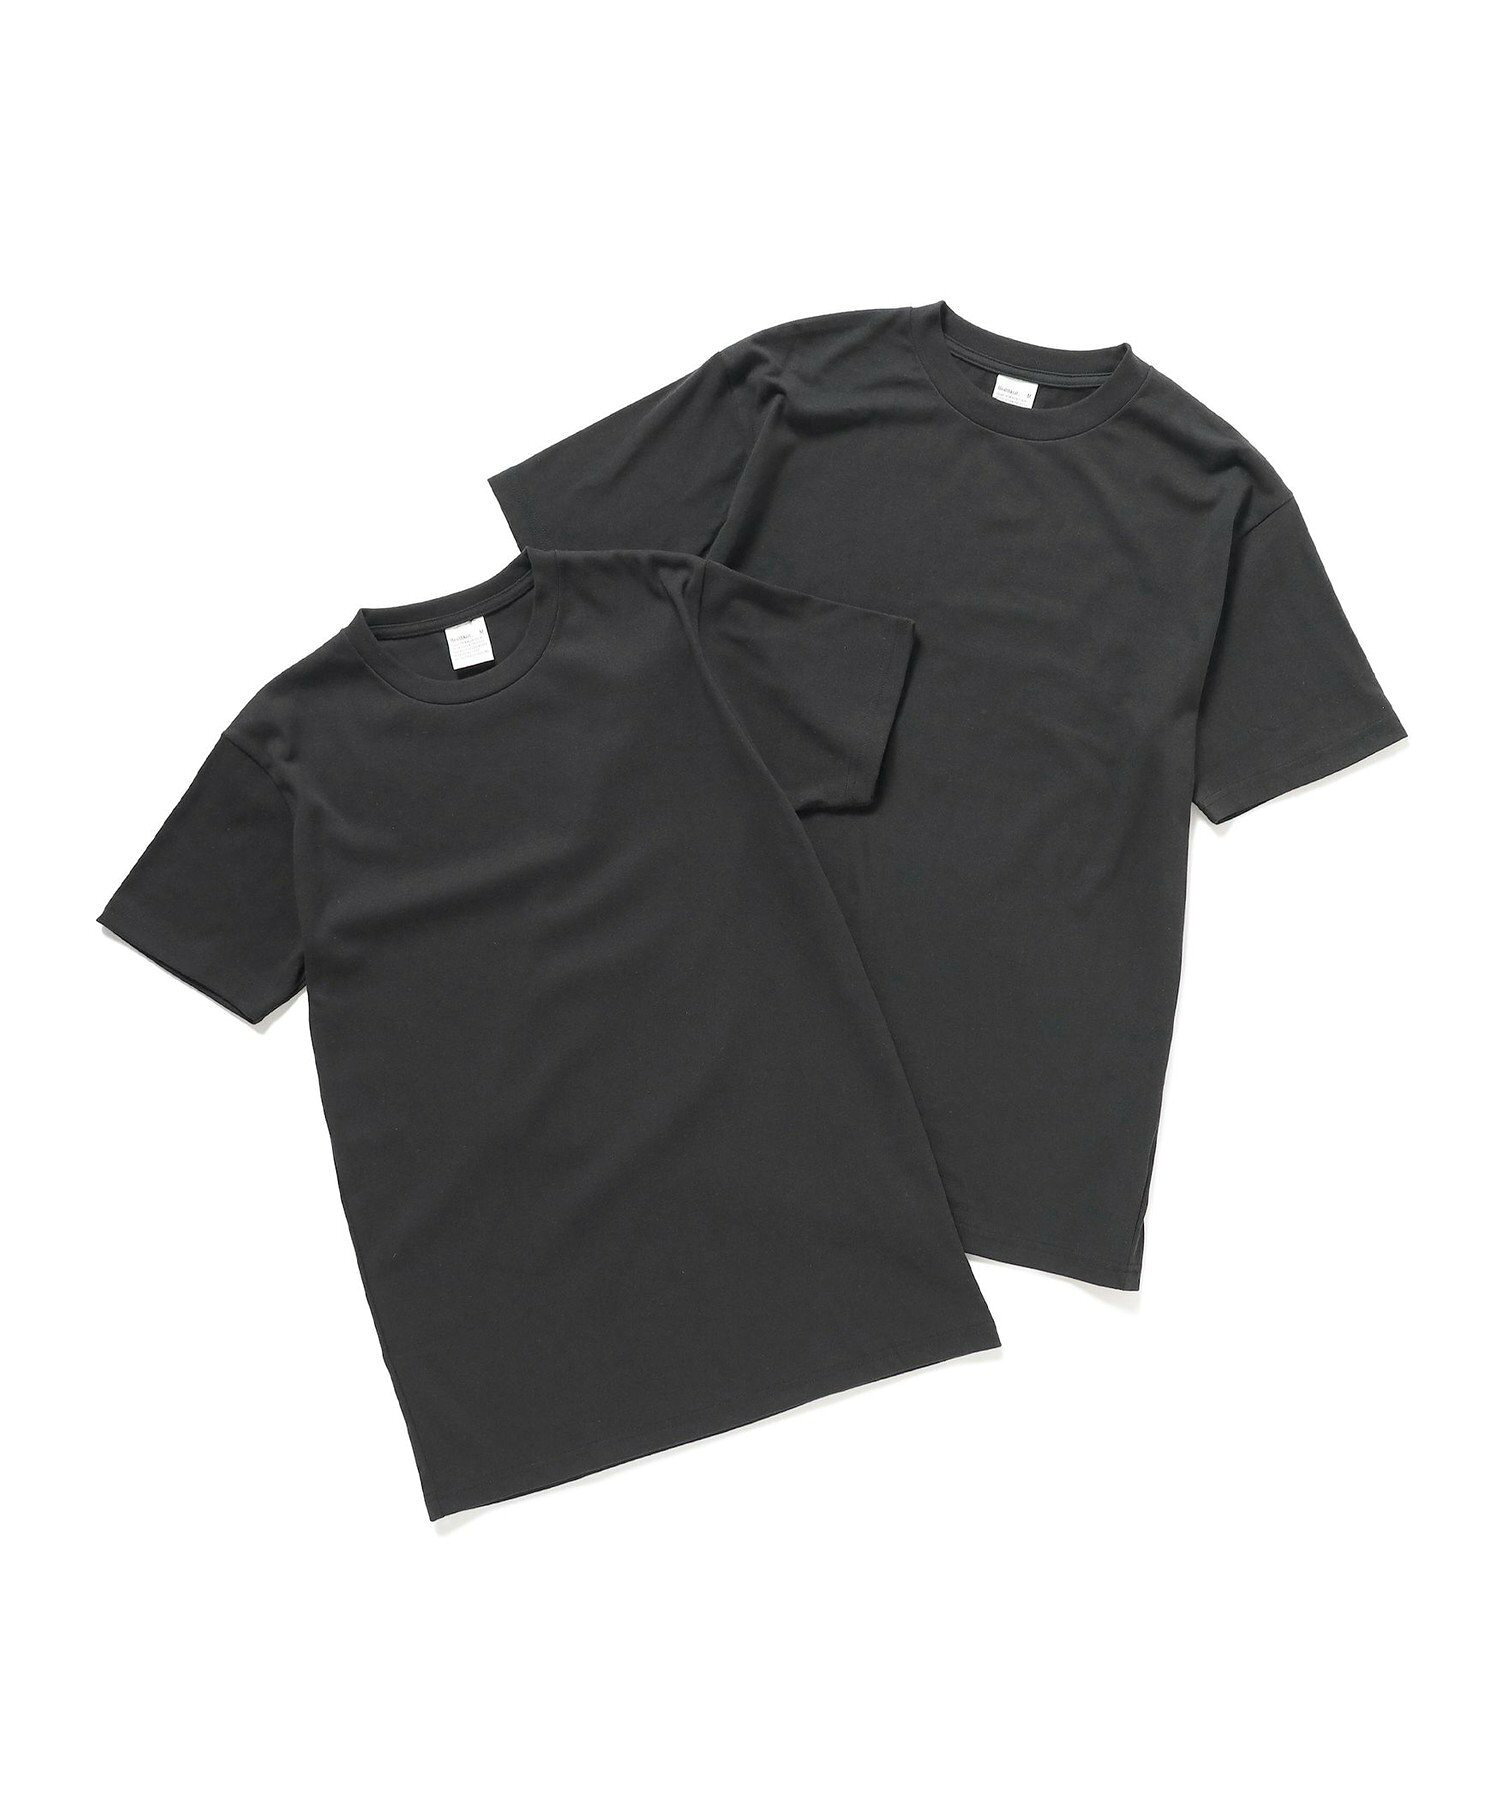 Healthknit / ミリタリー 2パック クルーネック  Tシャツ (天竺素材&フライス素材)